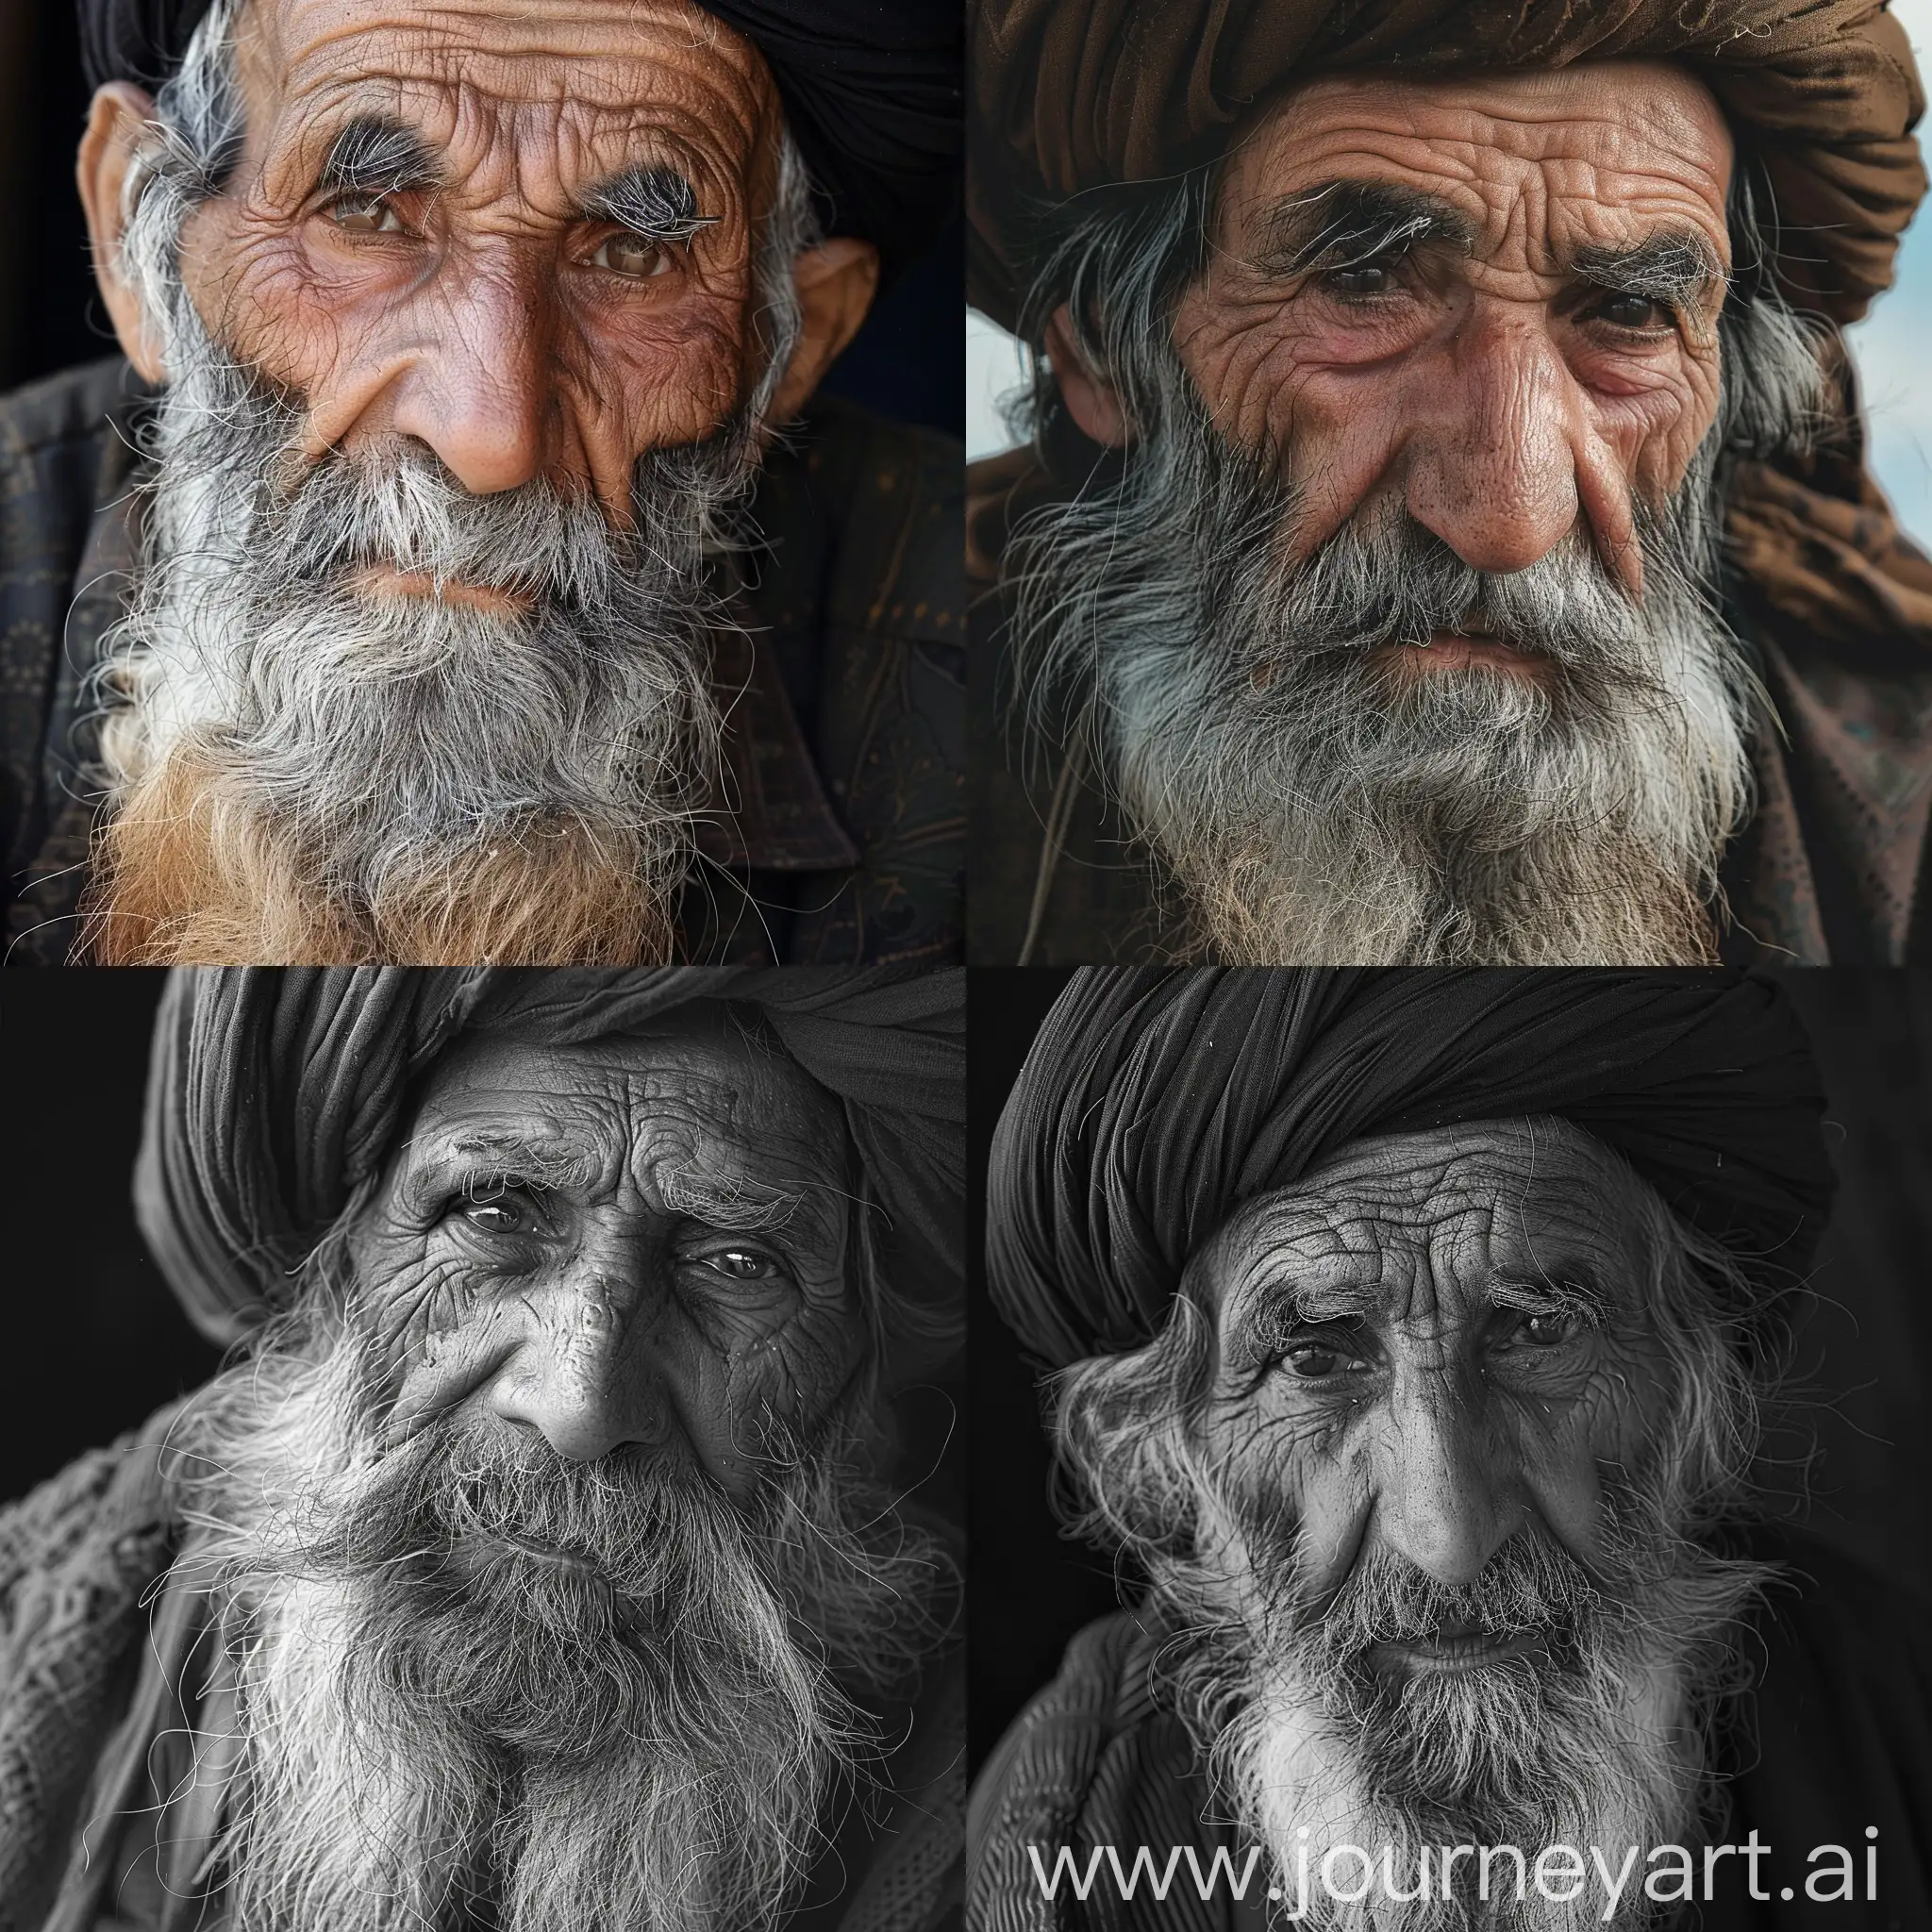 Elderly-Iranian-Man-with-Long-Beard-in-Traditional-Attire